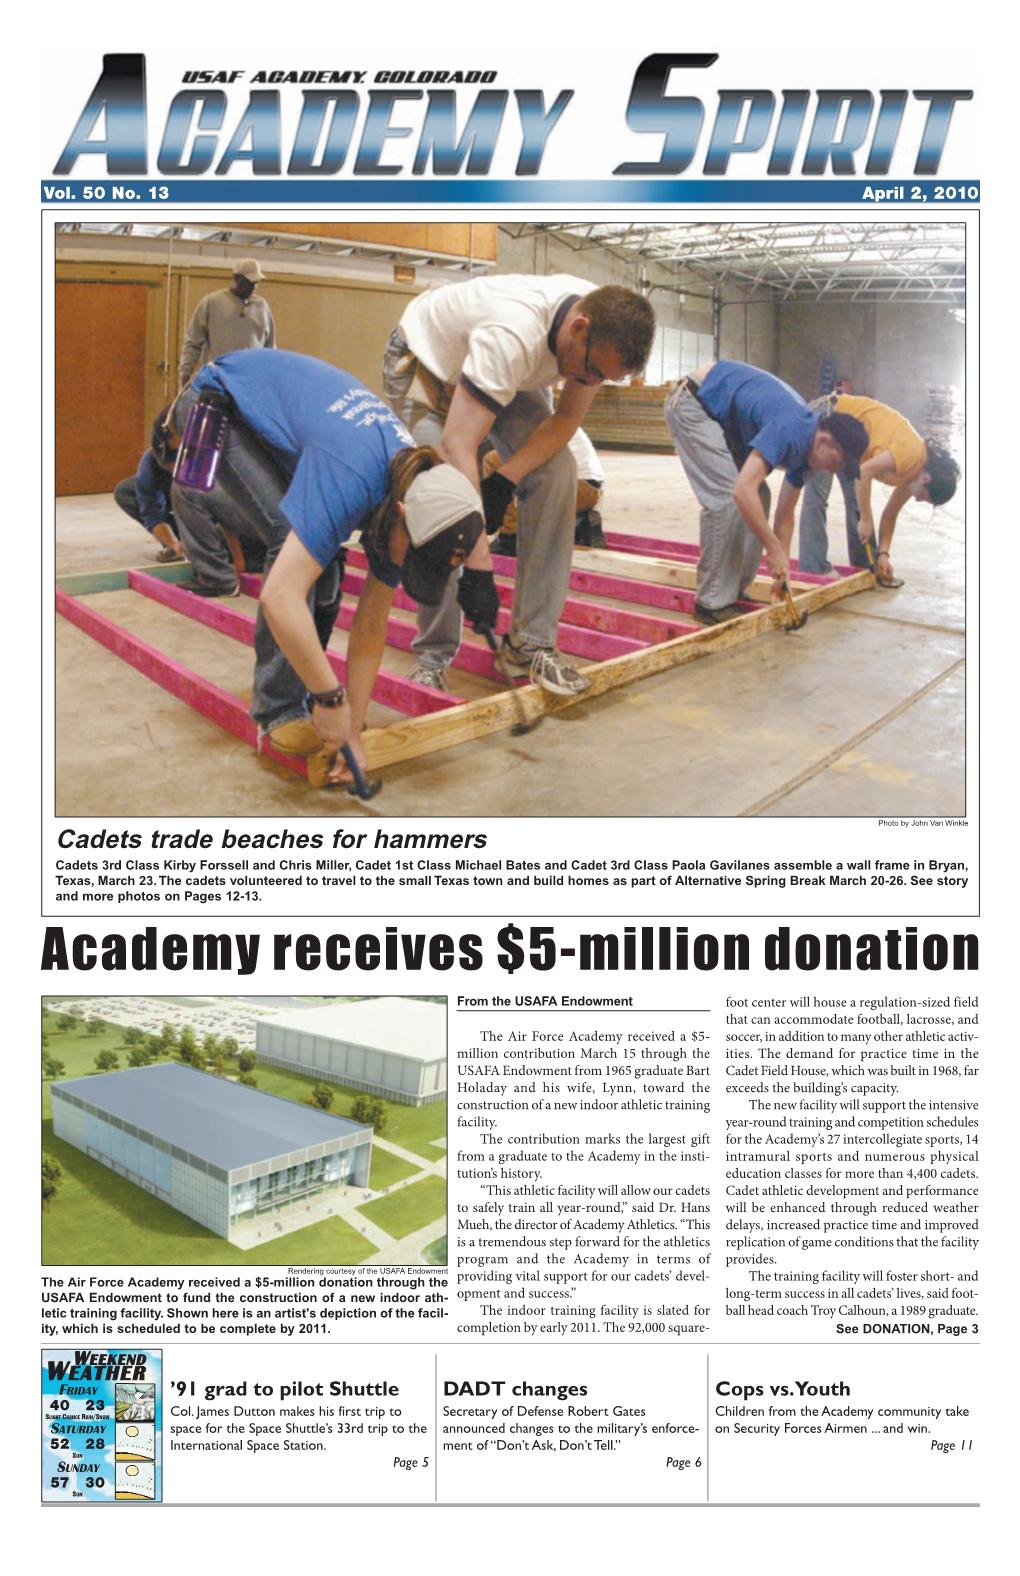 Academy Receives $5-Million Donation